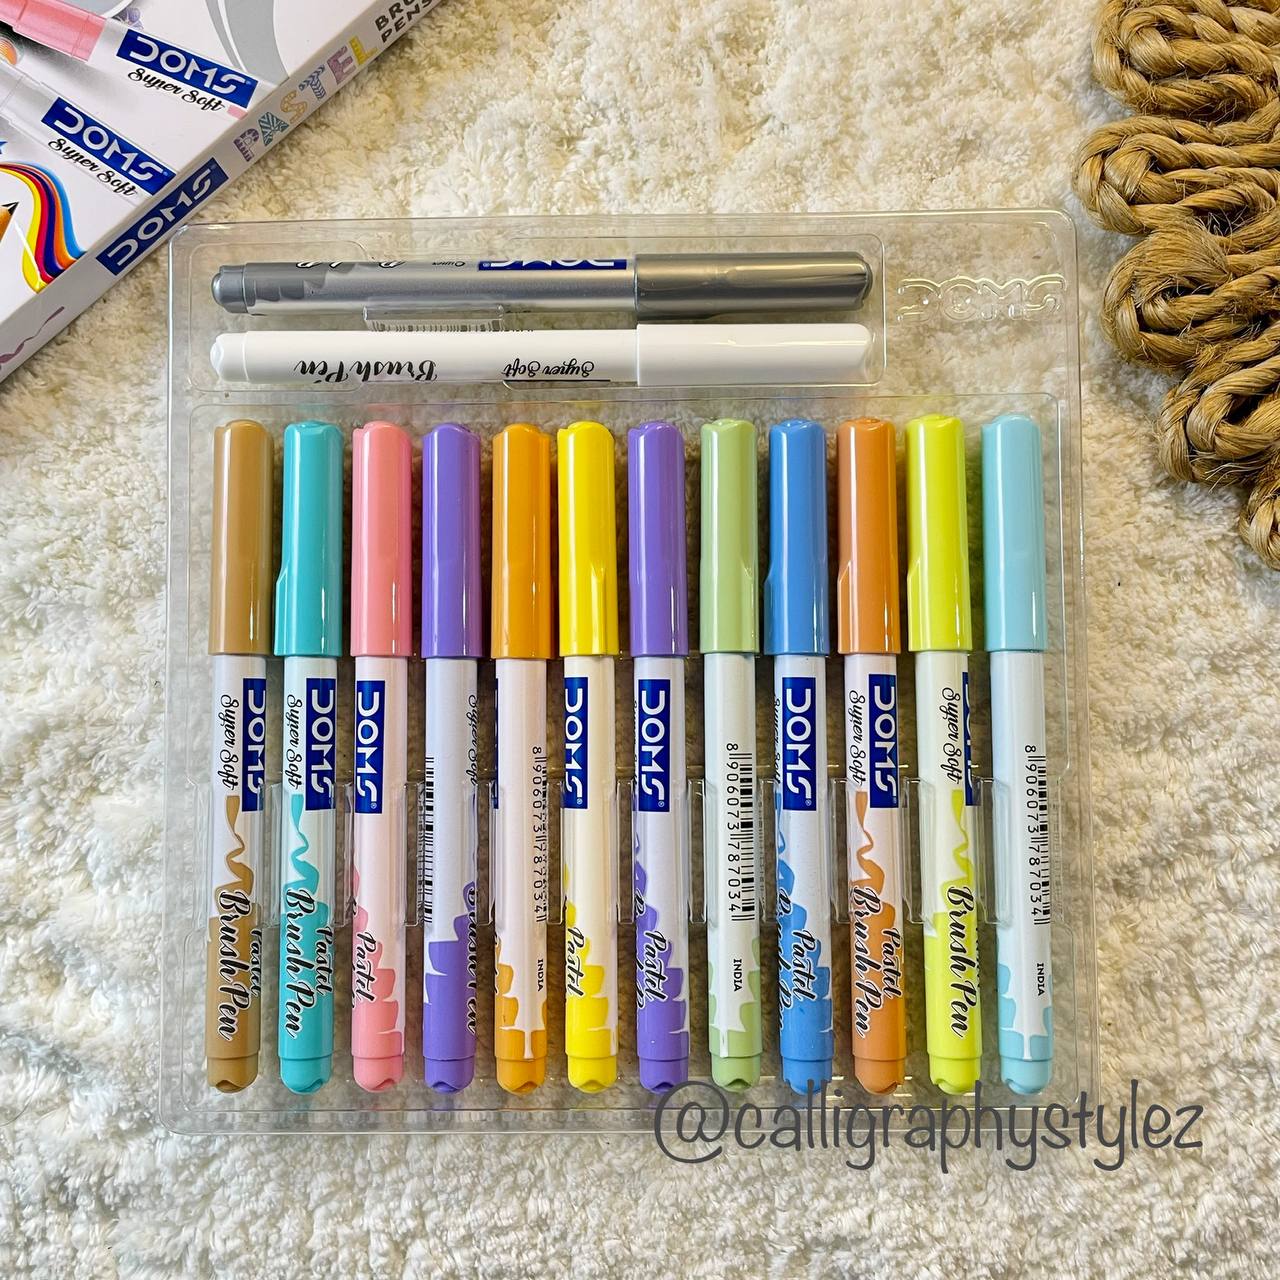  Doms Super Soft Tip Pastel Shades Brush Pen Set